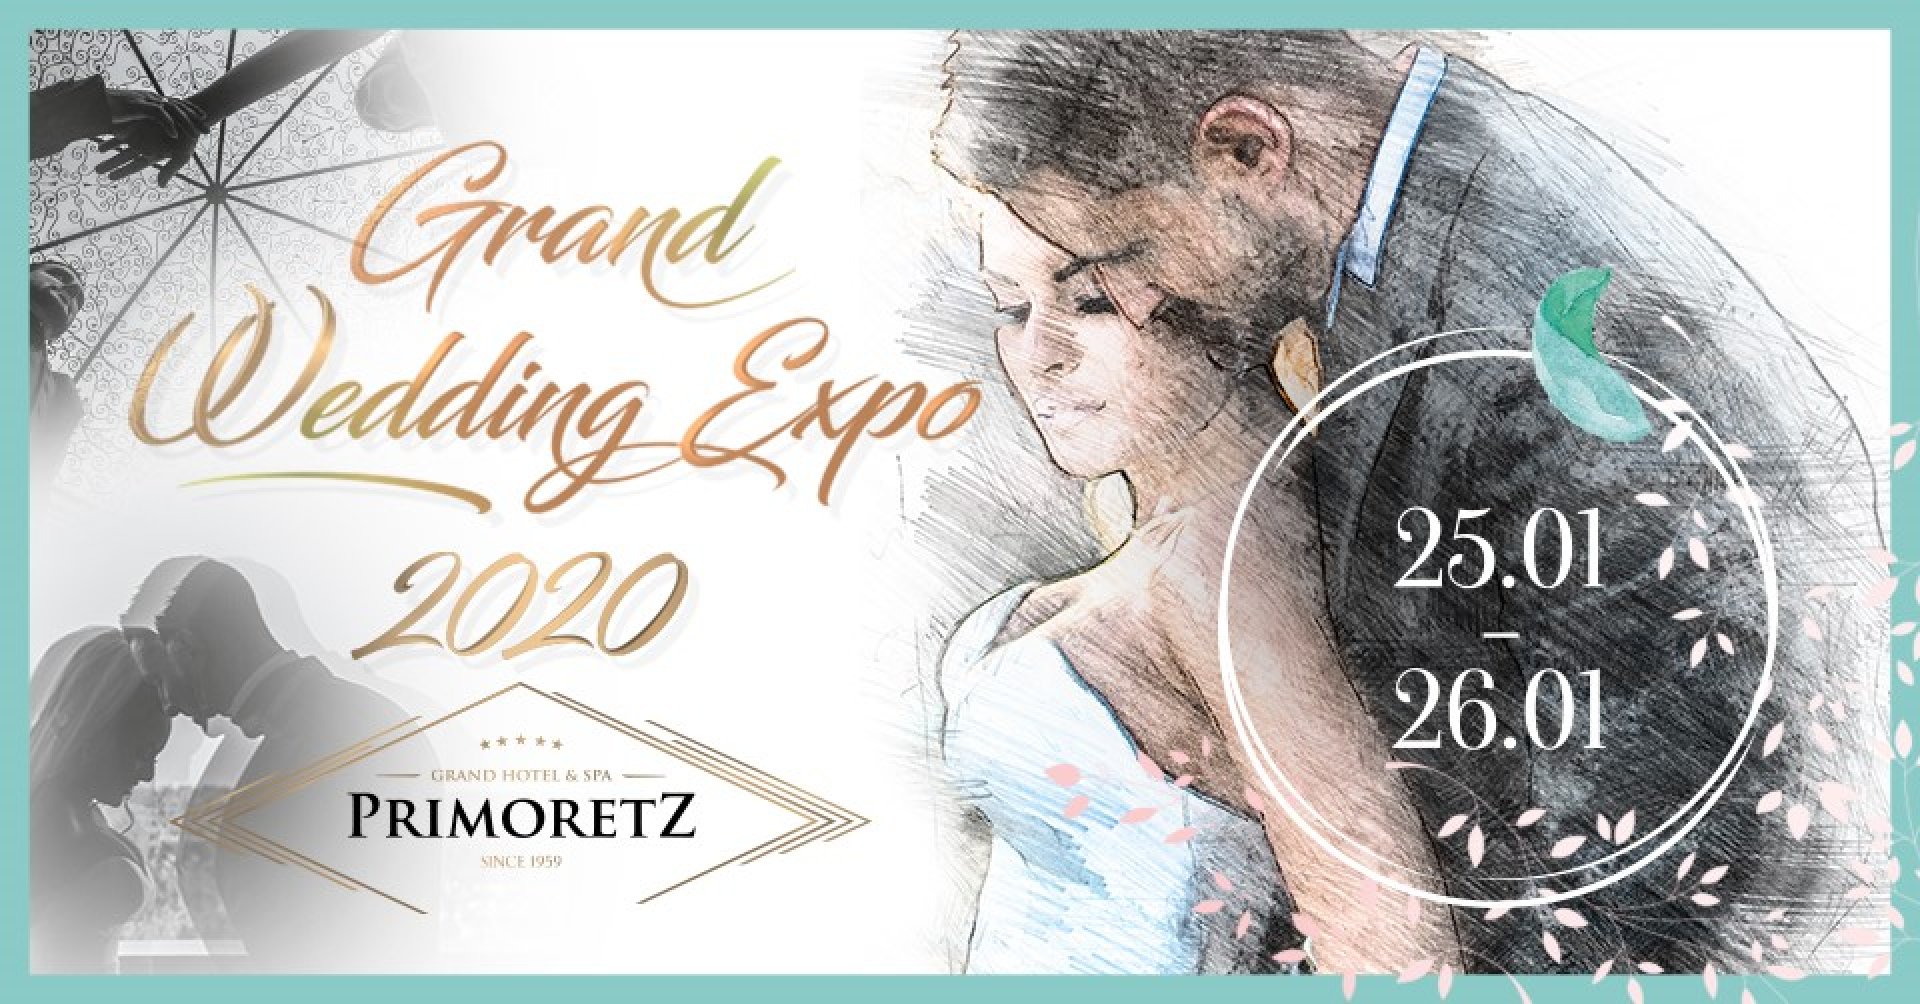 Вижте програмата и участниците в Grand Wedding Expo 2020 - E-Burgas.com